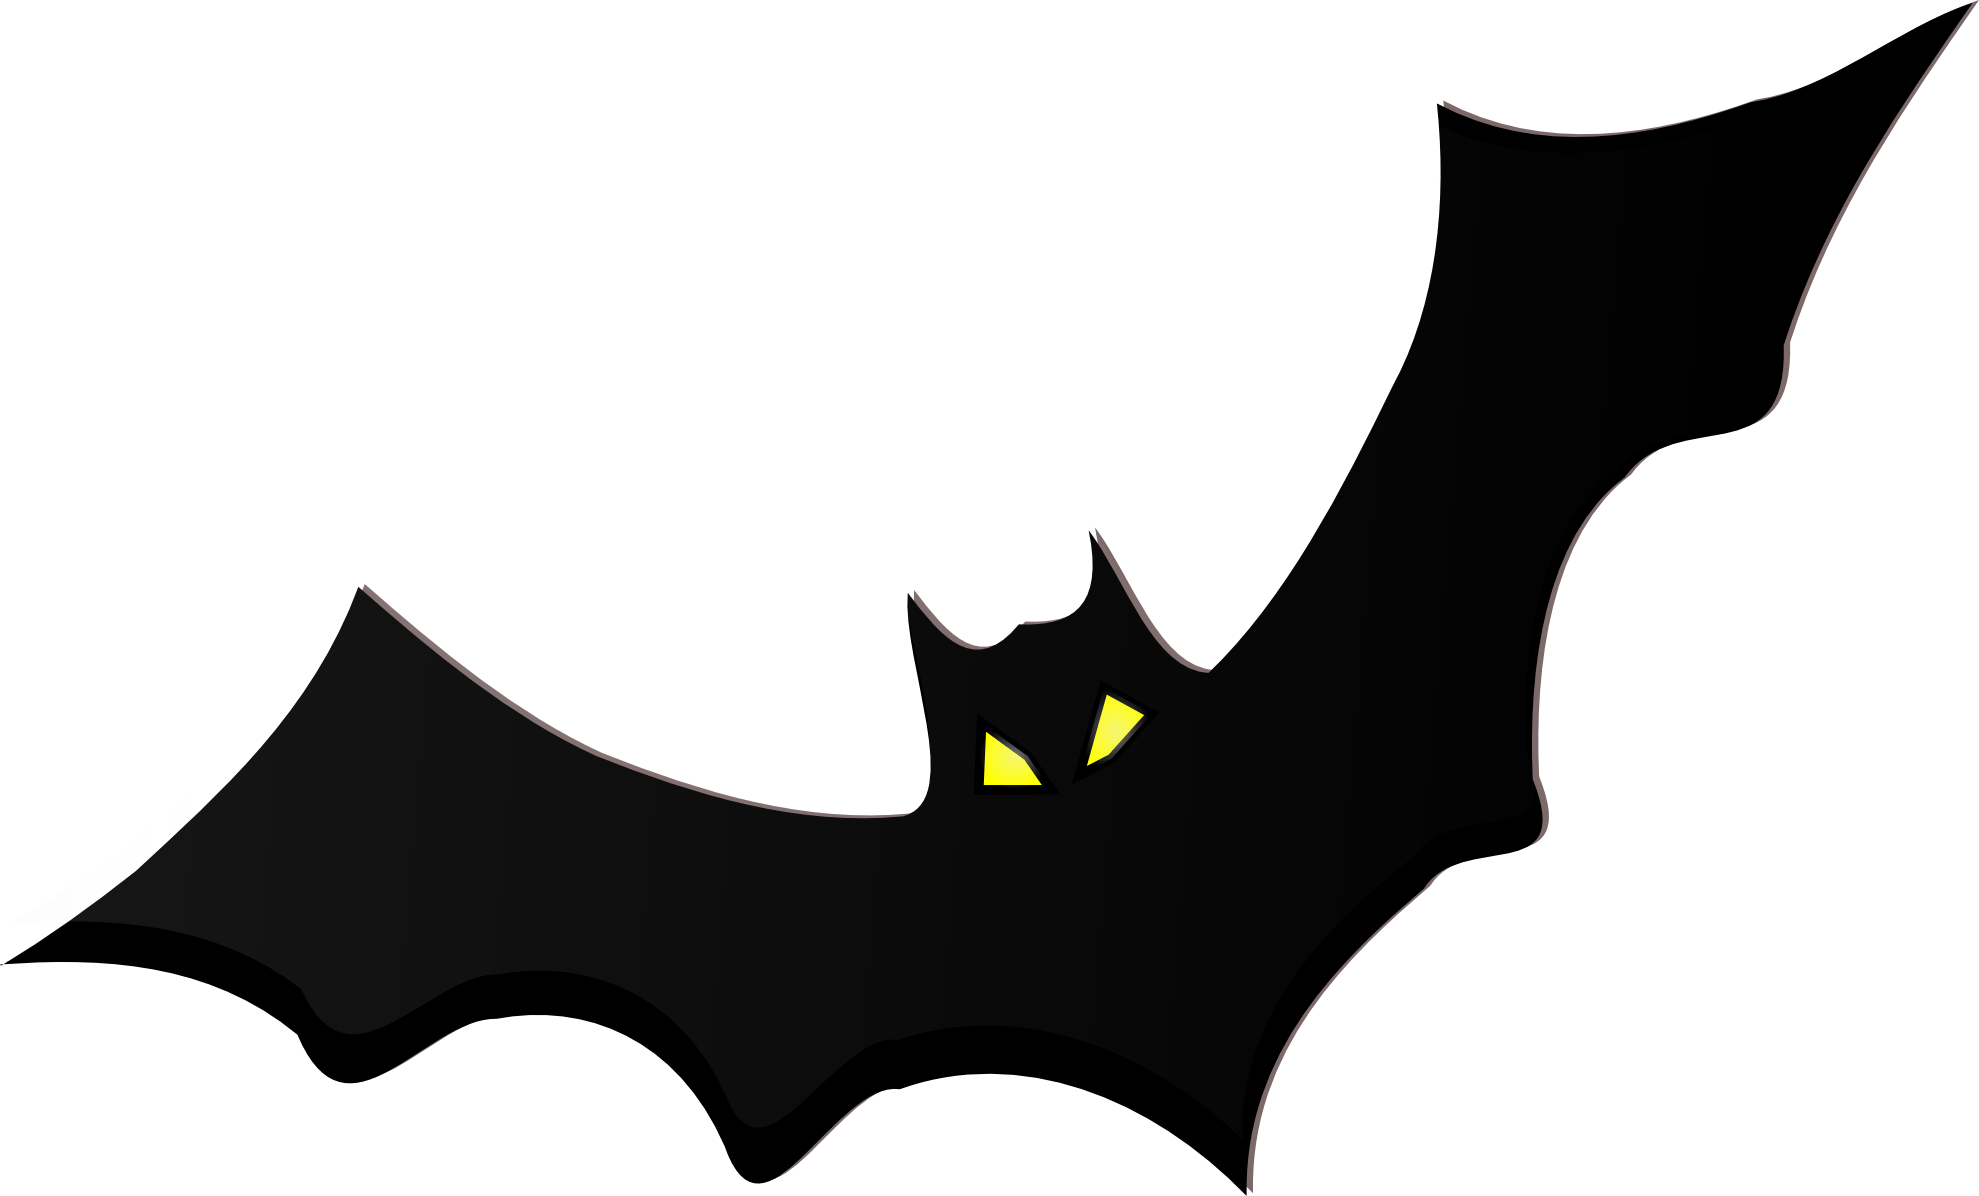 Bat logo clipart.